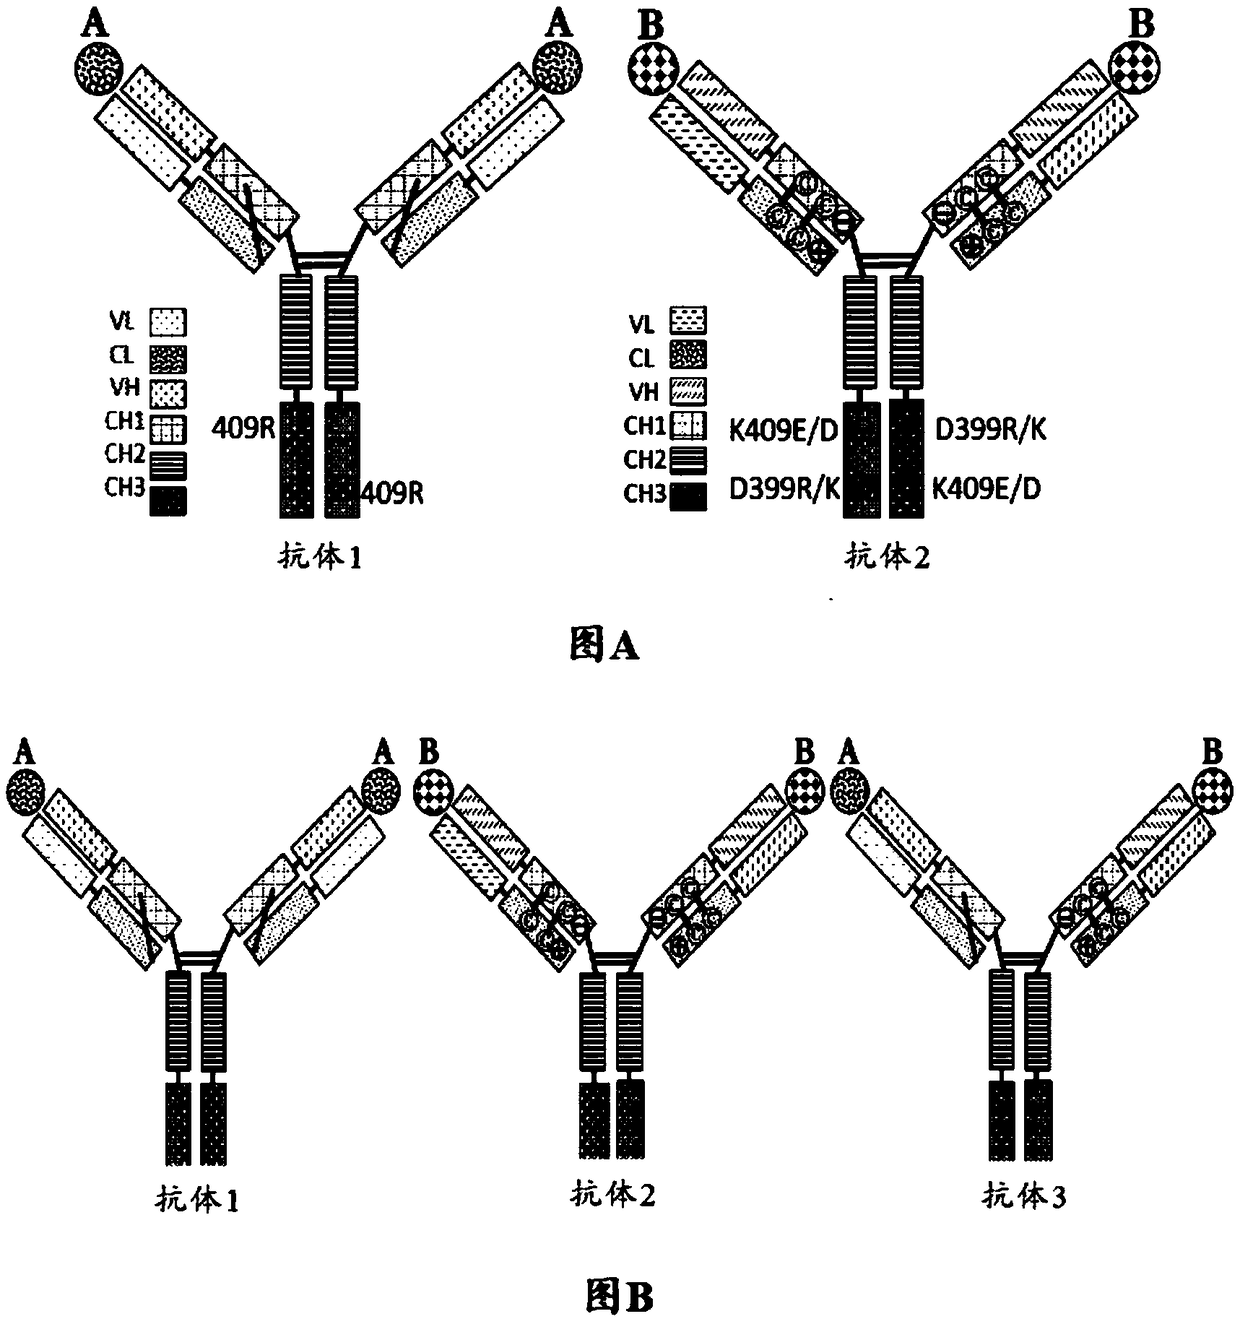 Mixtures of antibodies